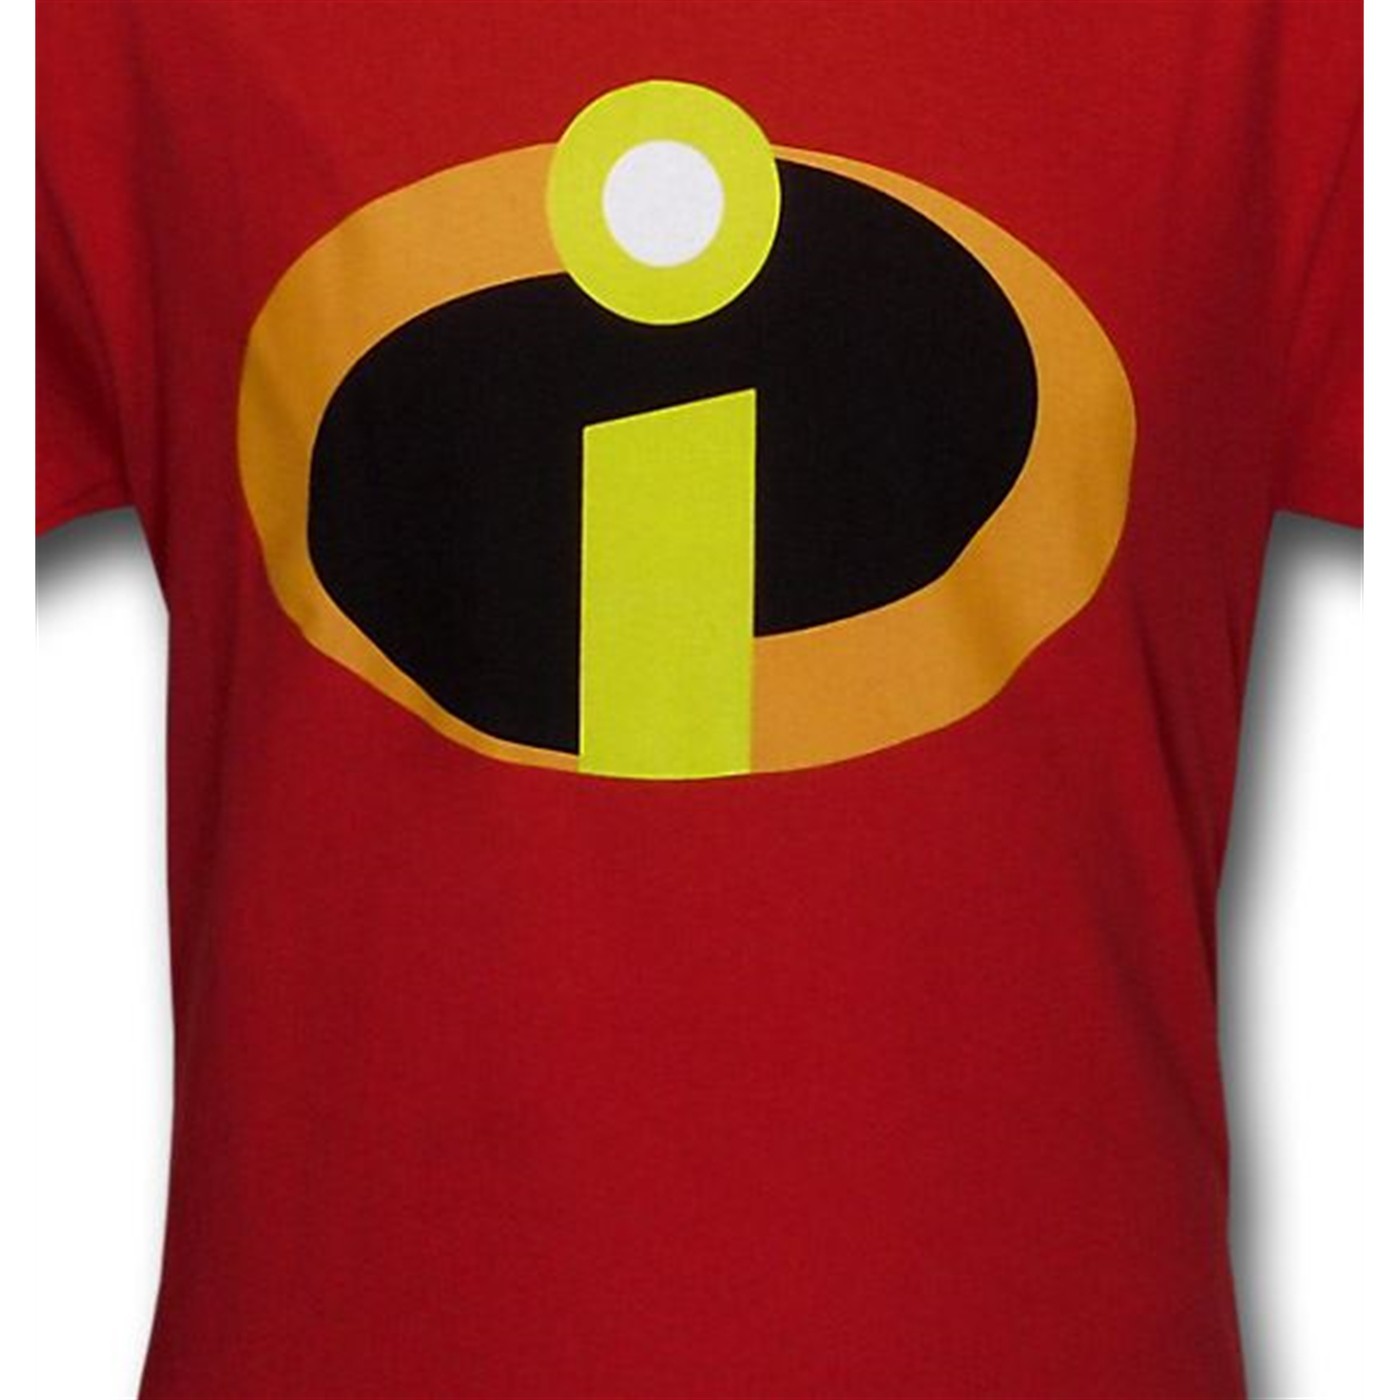 The Incredibles Symbol T-Shirt